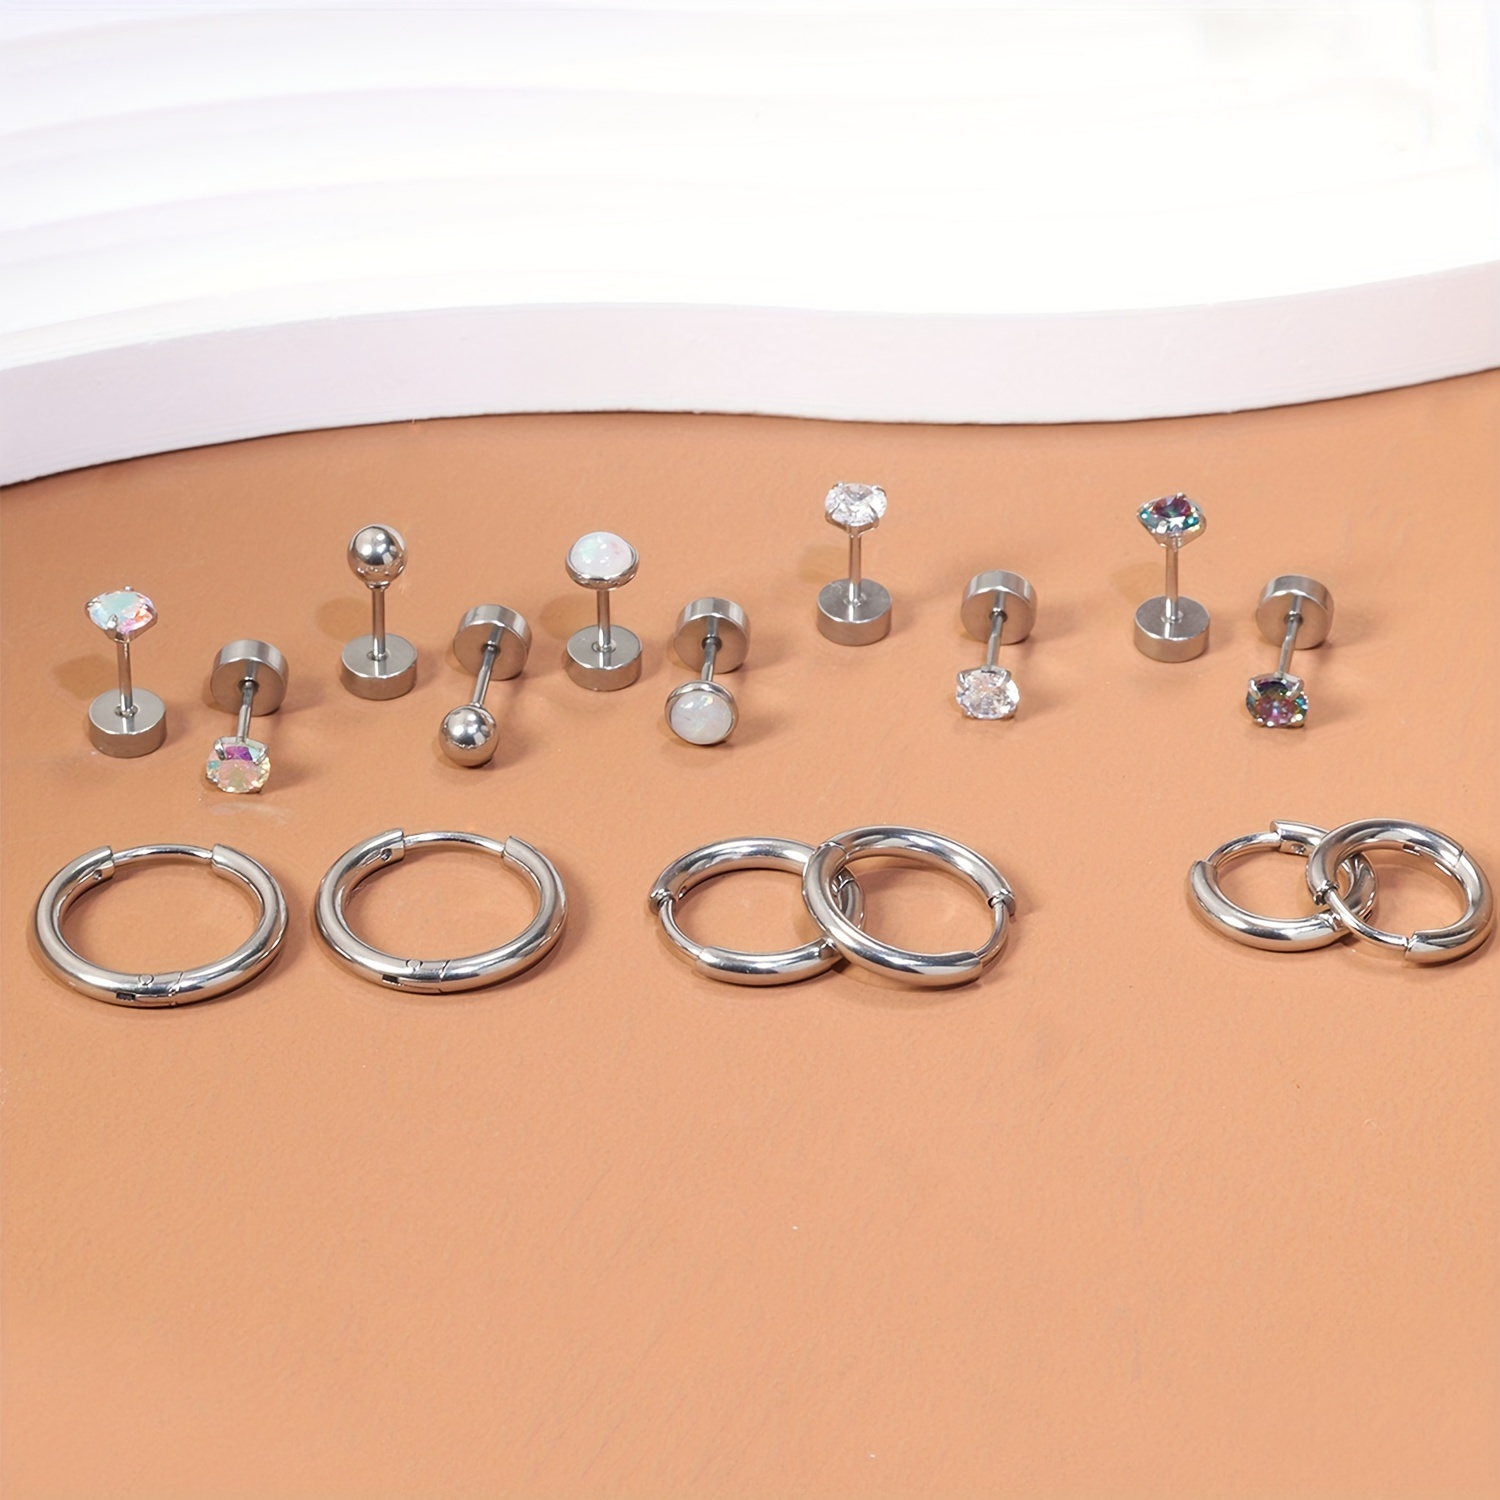 

8pairs Surgical Stainless Steel Earrings For Sensitive Ears Small Opal Ball Cz Flat Back Stud Earrings Hypoallergenic Hoop Earrings For Women Men 20g Cartilage Earrings